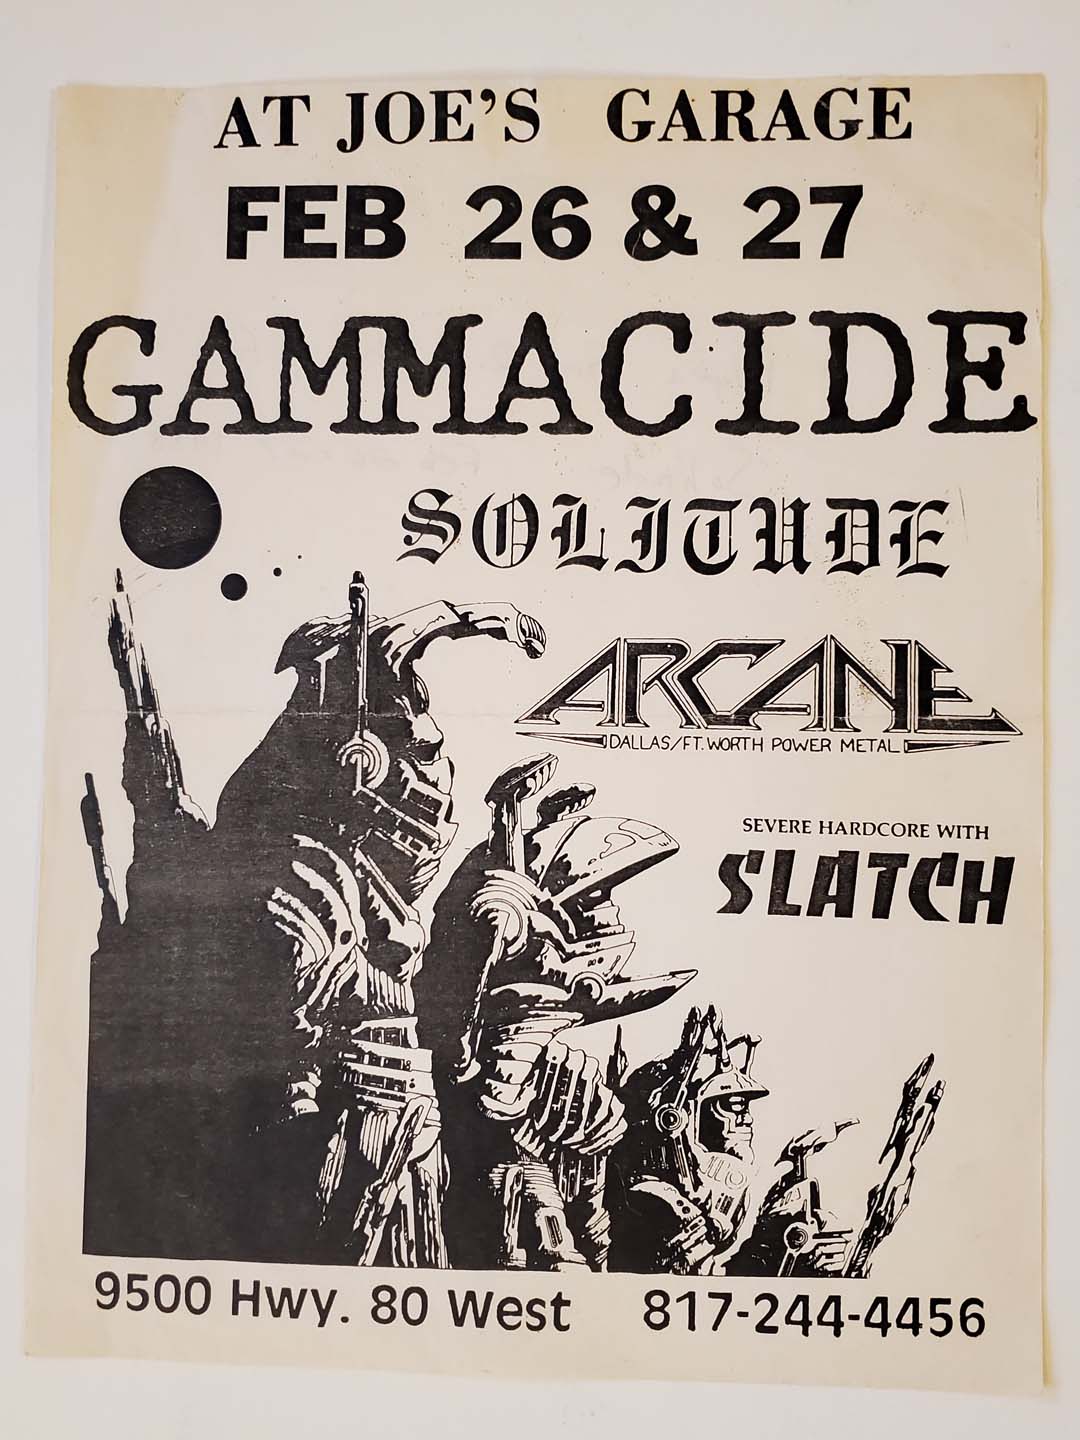 Solitude Aeturnus Flyer, Joe's Garage (1988-02-26 & 27)